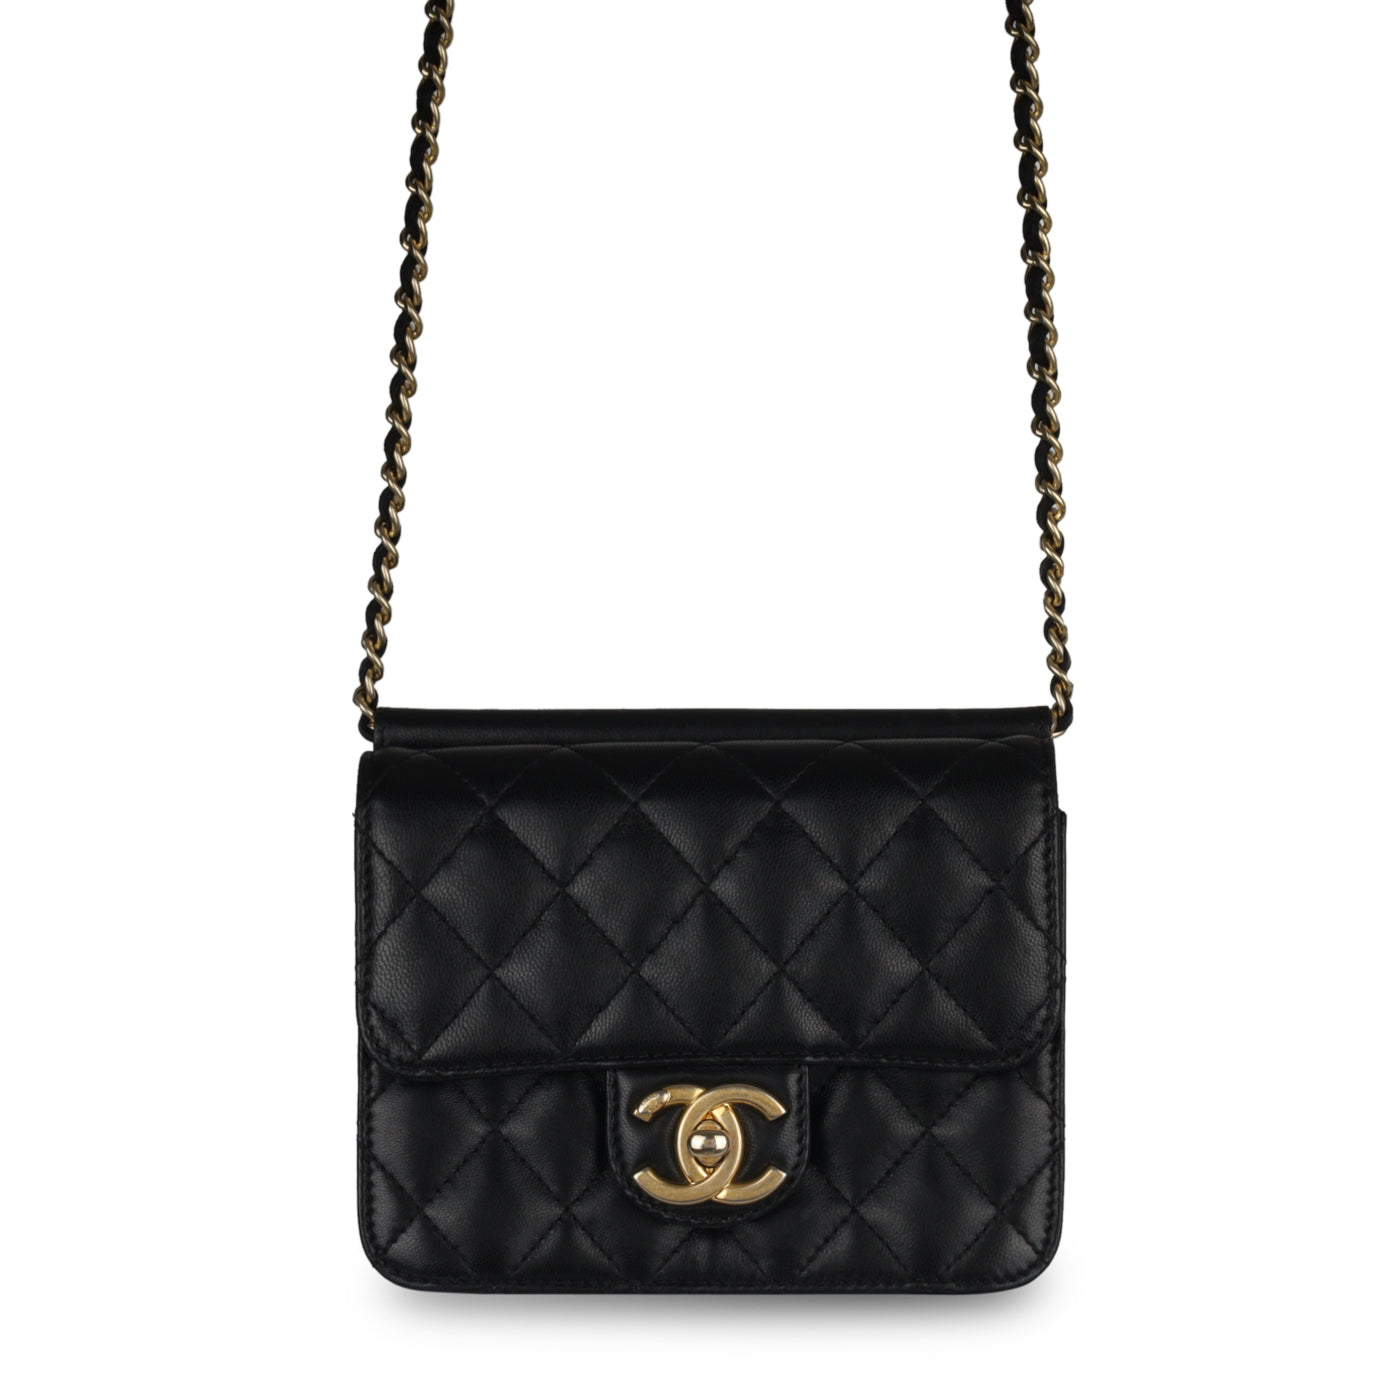 Chanel - Crossing Times Flap Bag - Black Lambskin - GHW - Pre Loved